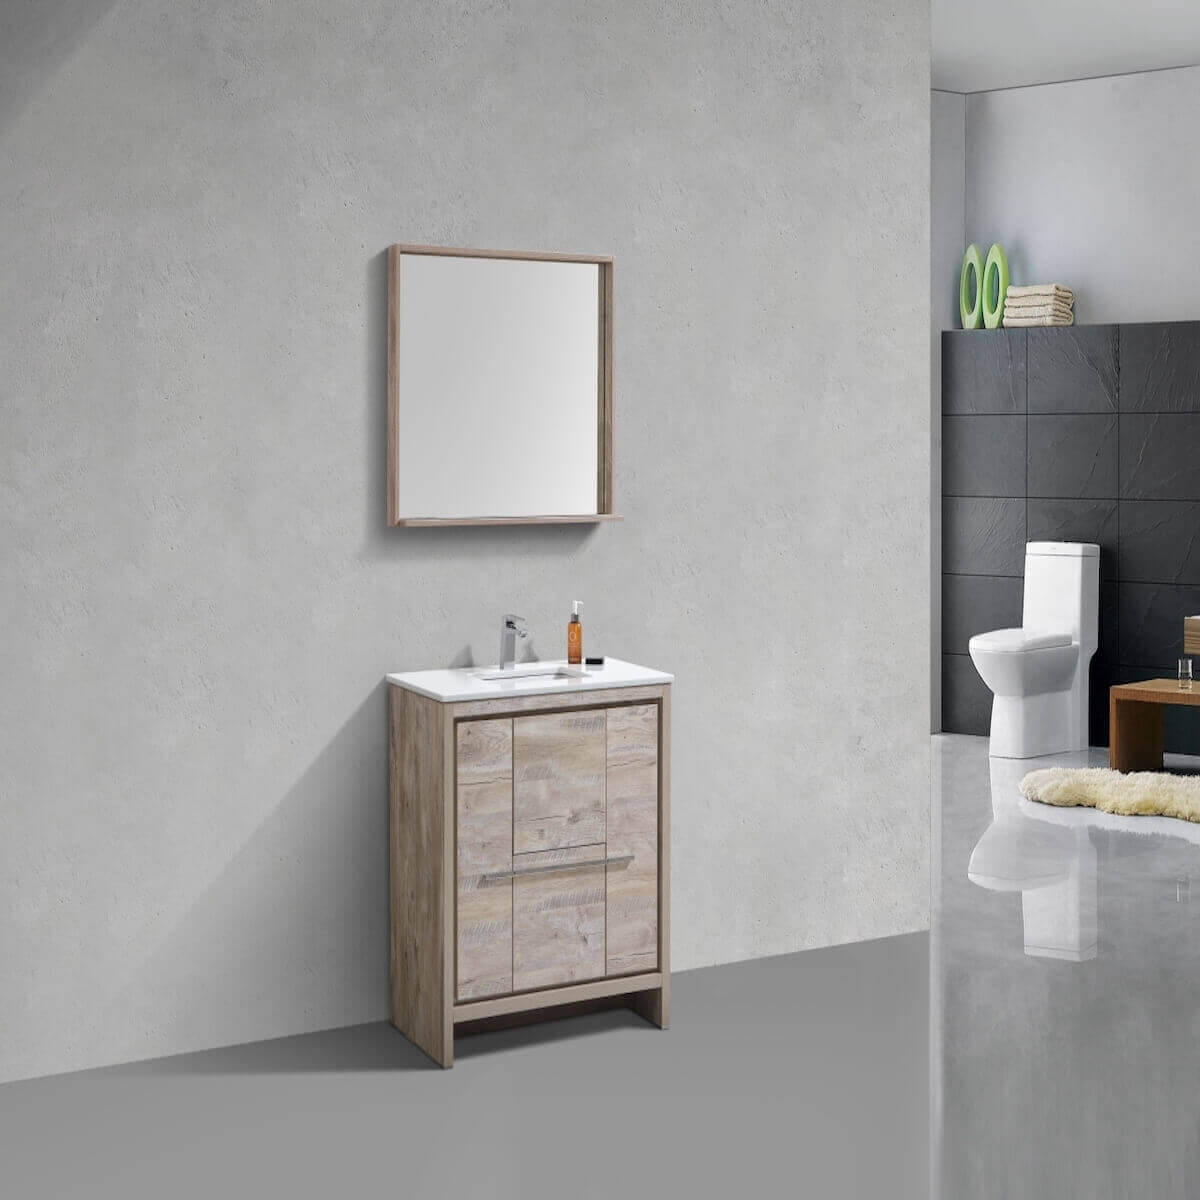 KubeBath Dolce 36" Nature Wood Freestanding Single Vanity with Quartz Countertop AD636NW in Bathroom #finish_nature wood